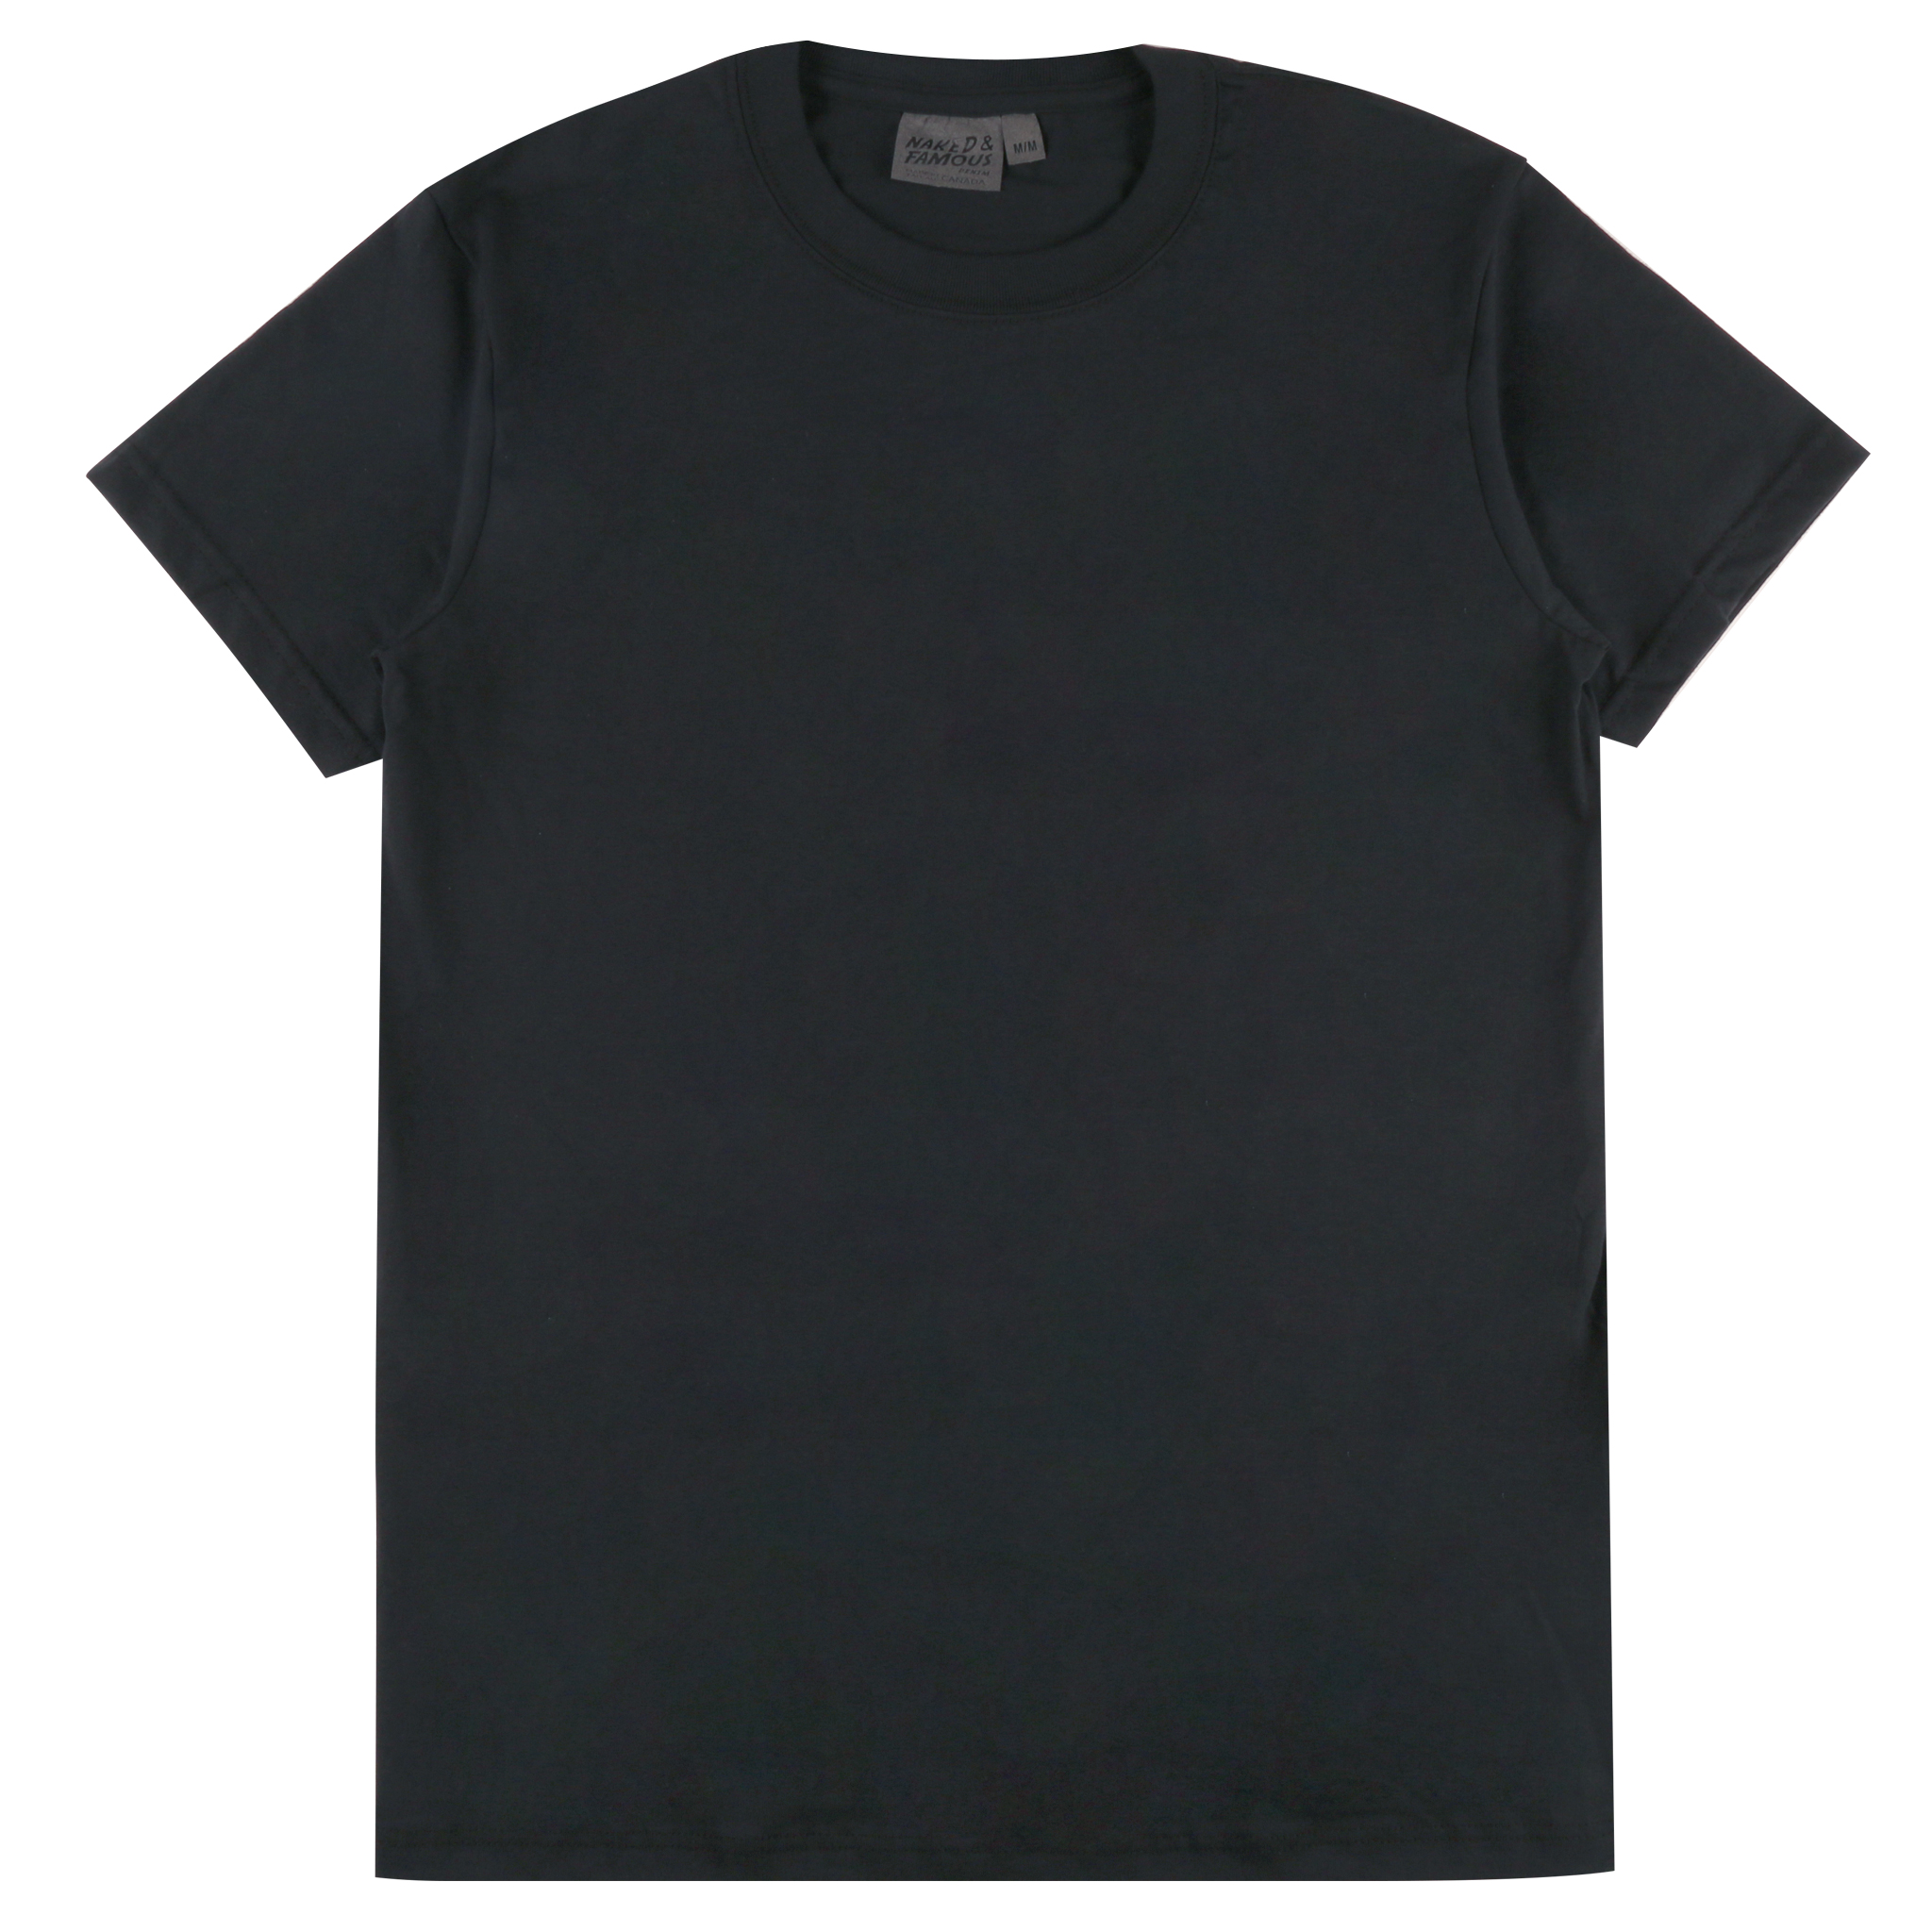  Black Circular Knit T-Shirt Flat View 